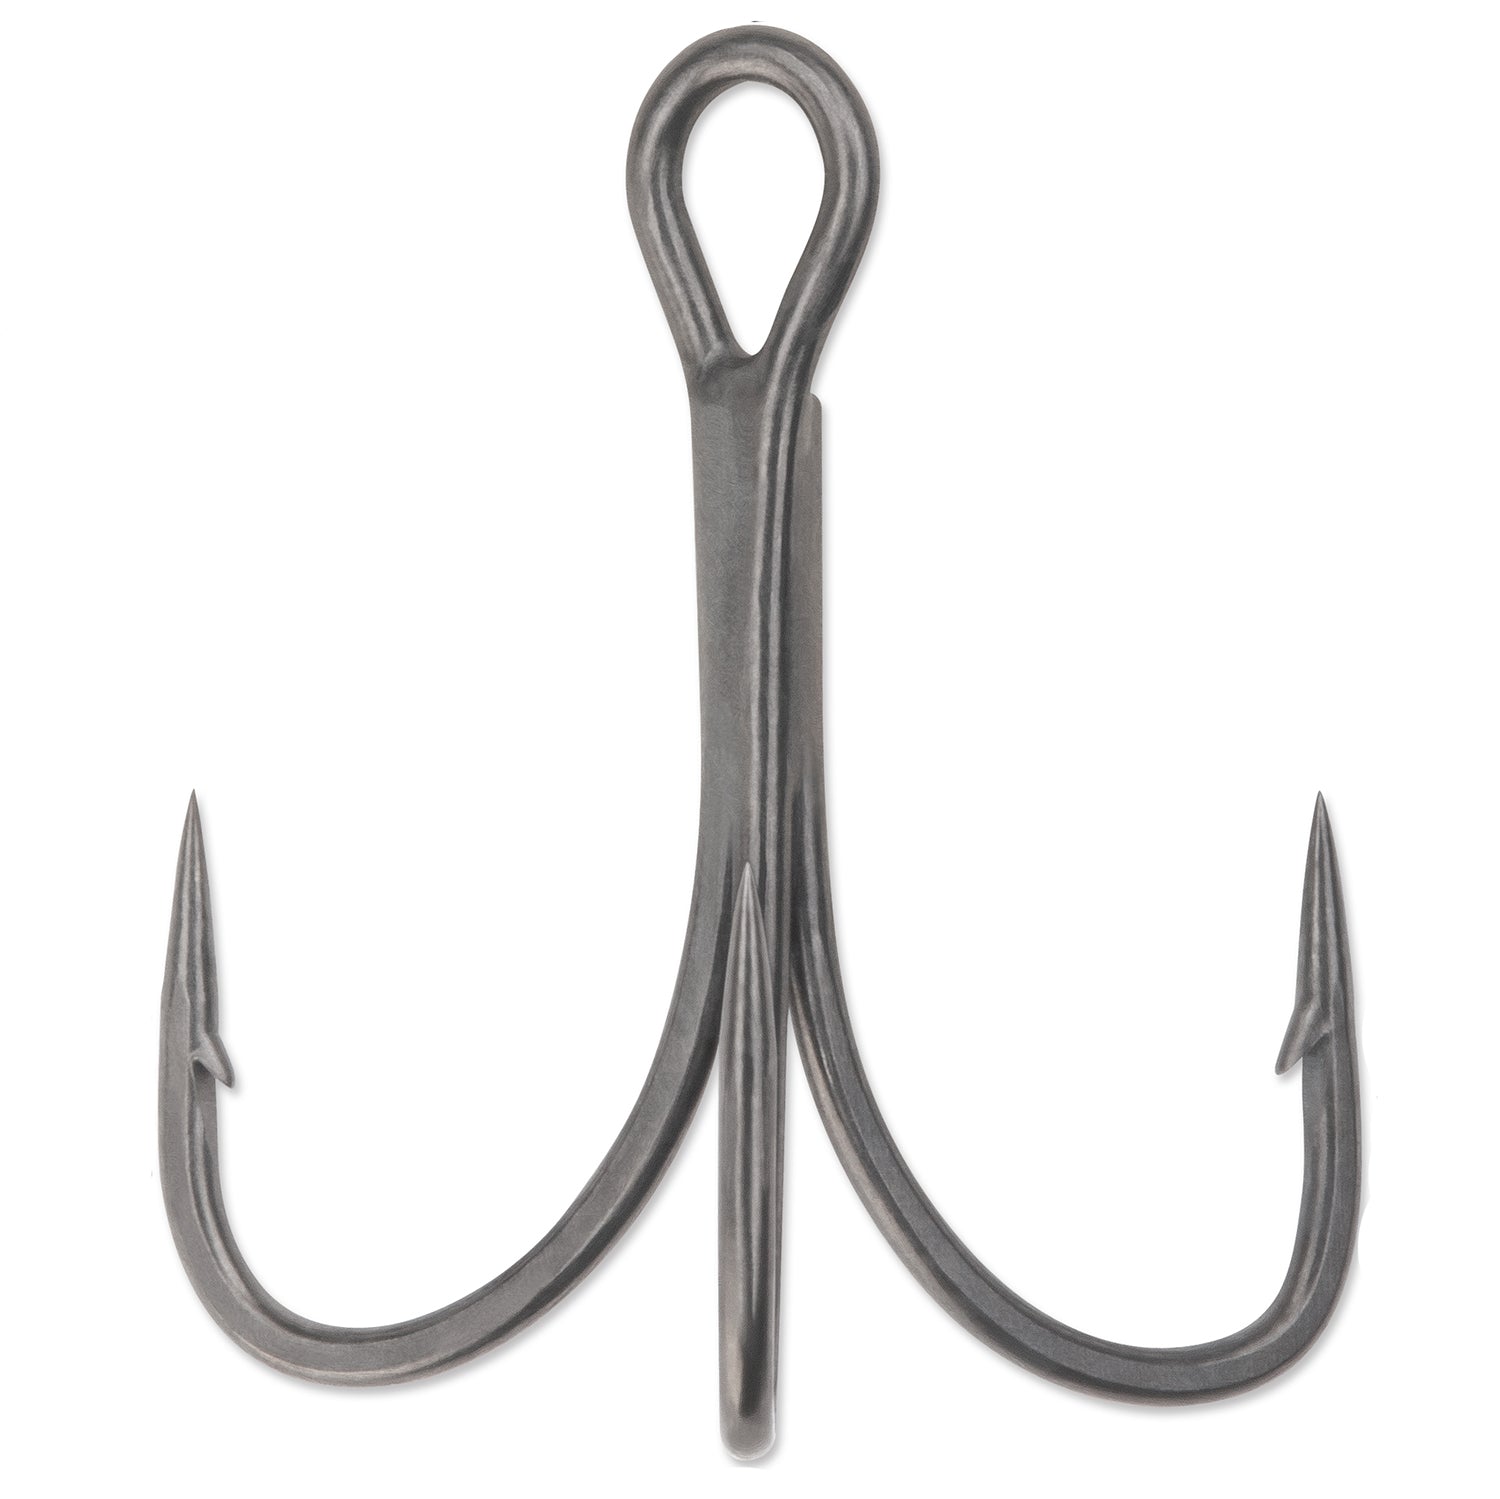 OROOTL 100pcs Fishing Treble Hooks Round Bend Barbed Treble Hook Size 1# 